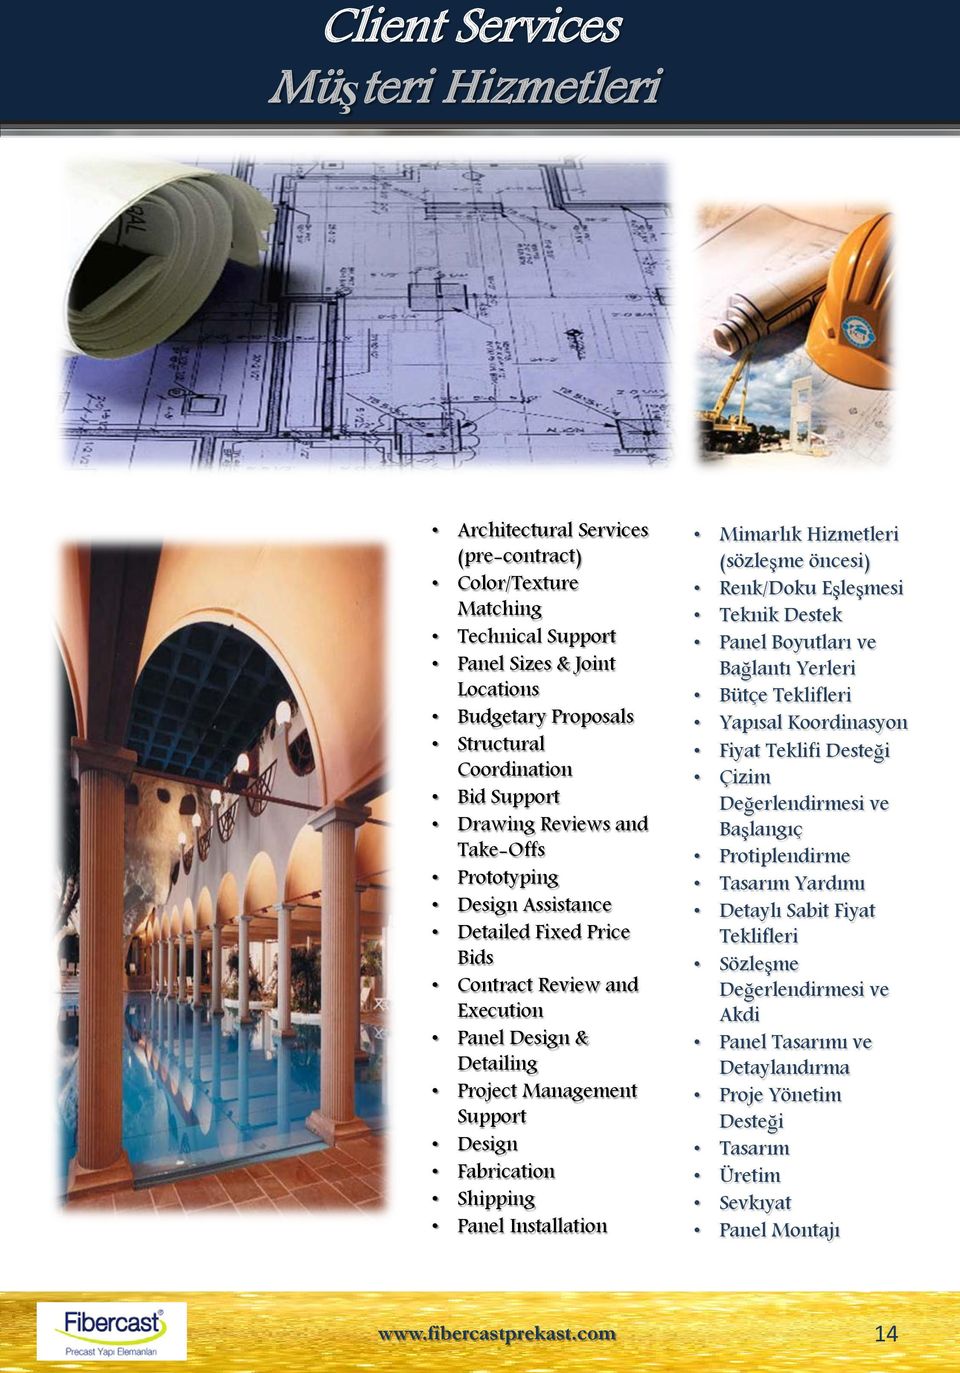 Execution Panel Design & Detailing Project Management Support Design Fabrication Shipping Panel Installation (sözleme öncesi) Renk/Doku Elemesi Teknik